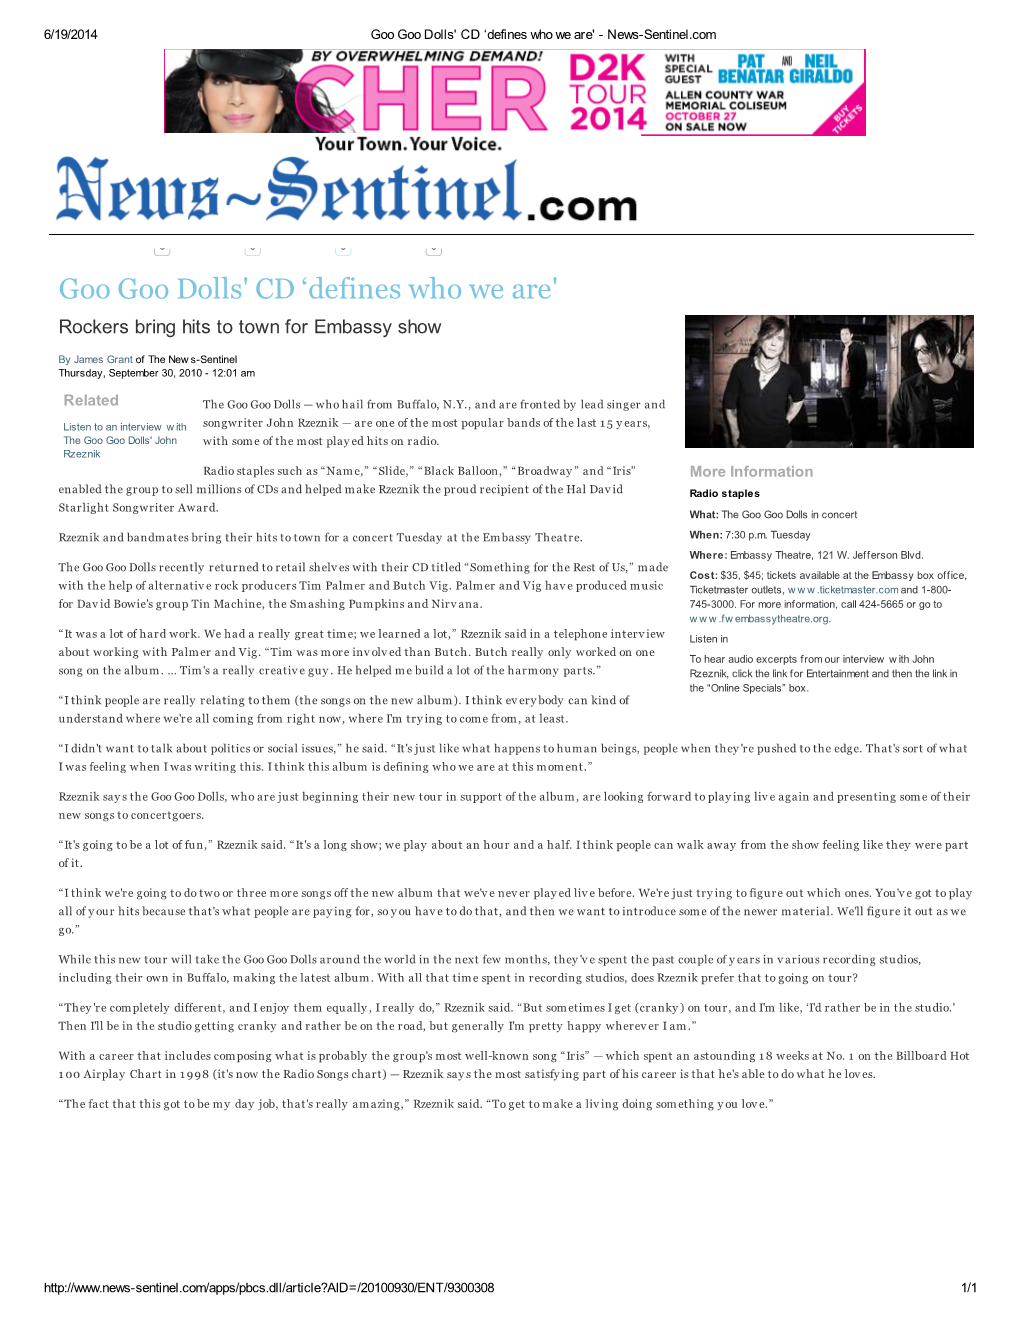 Goo Goo Dolls' CD ‘Defines Who We Are' - News-Sentinel.Com